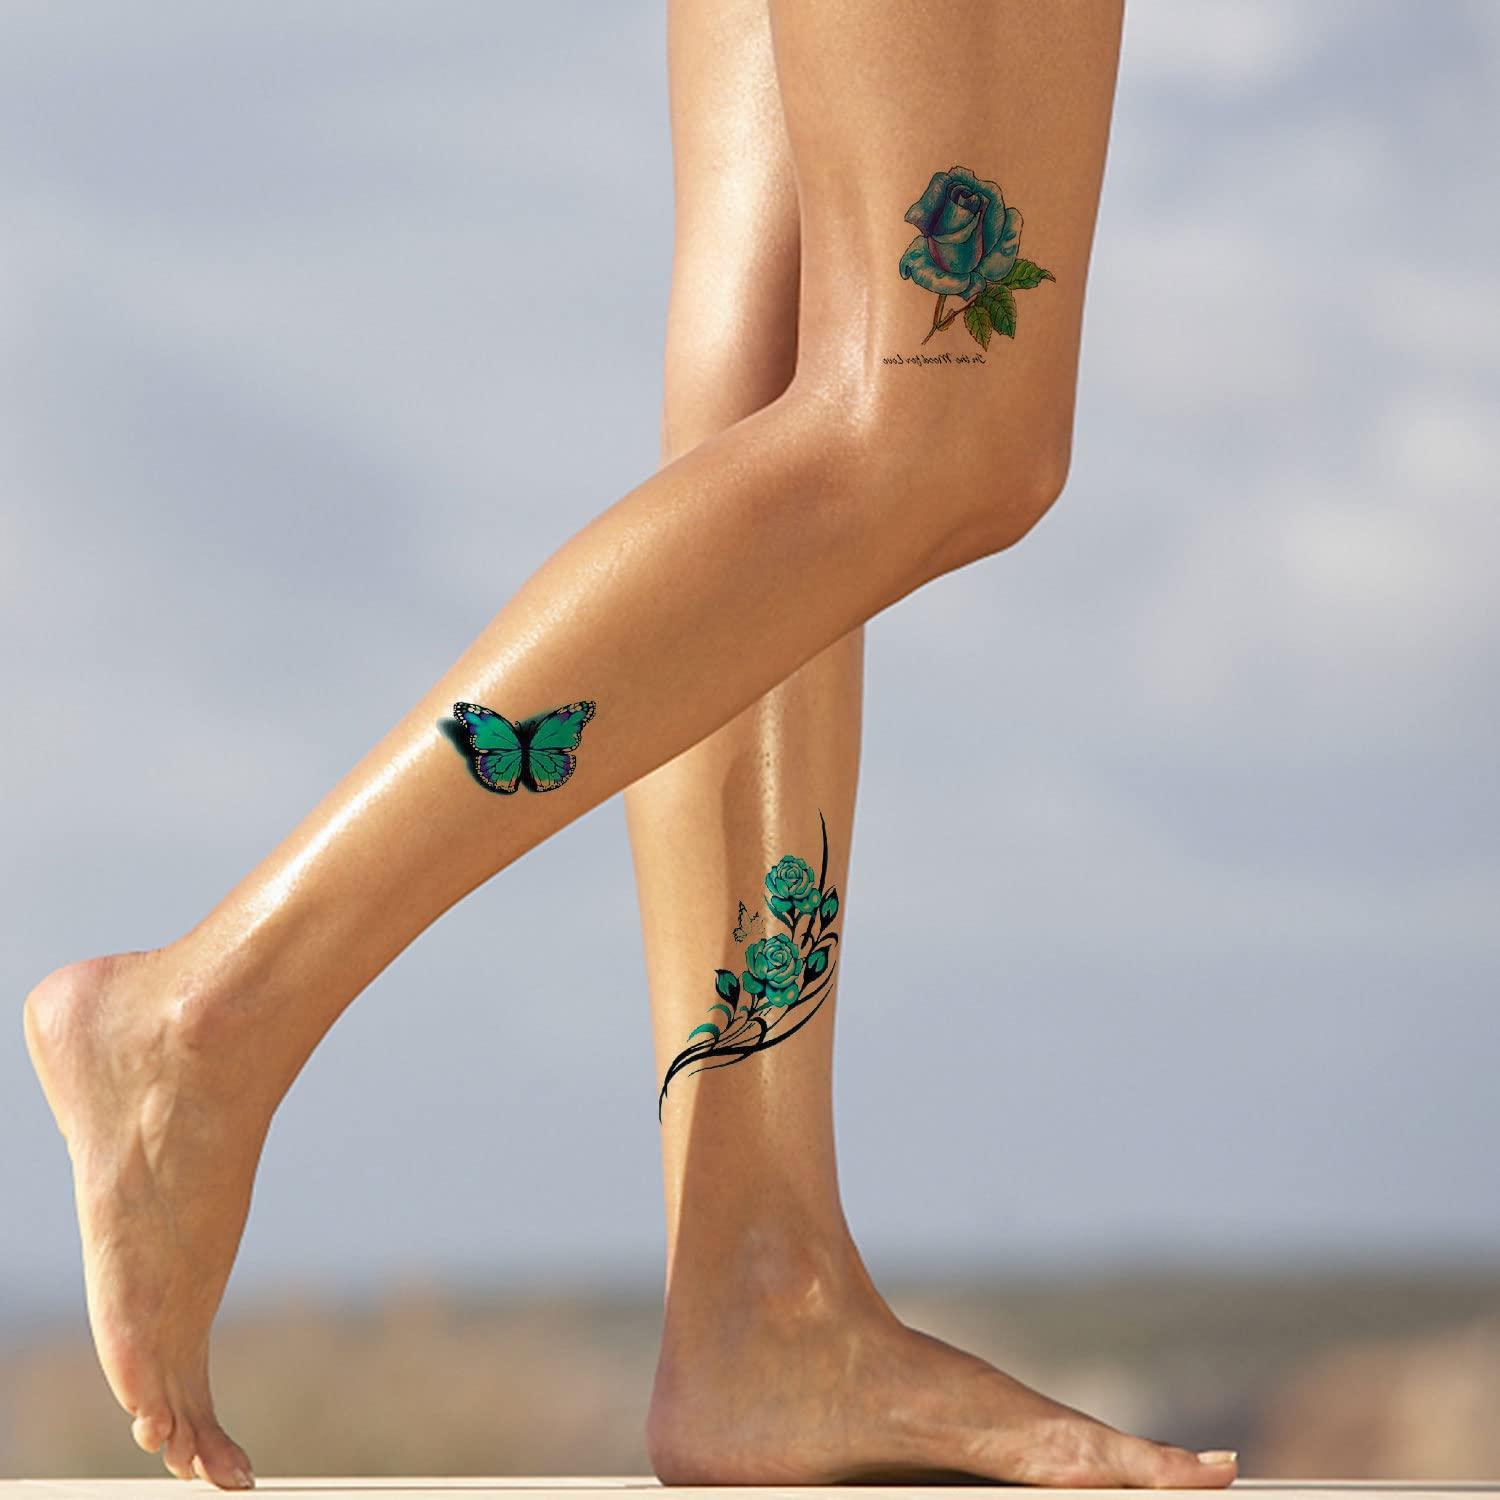 10 Amazing Ripped Skin Tattoo Designs and Ideas ? | by Kuhu Jakhmola |  Medium